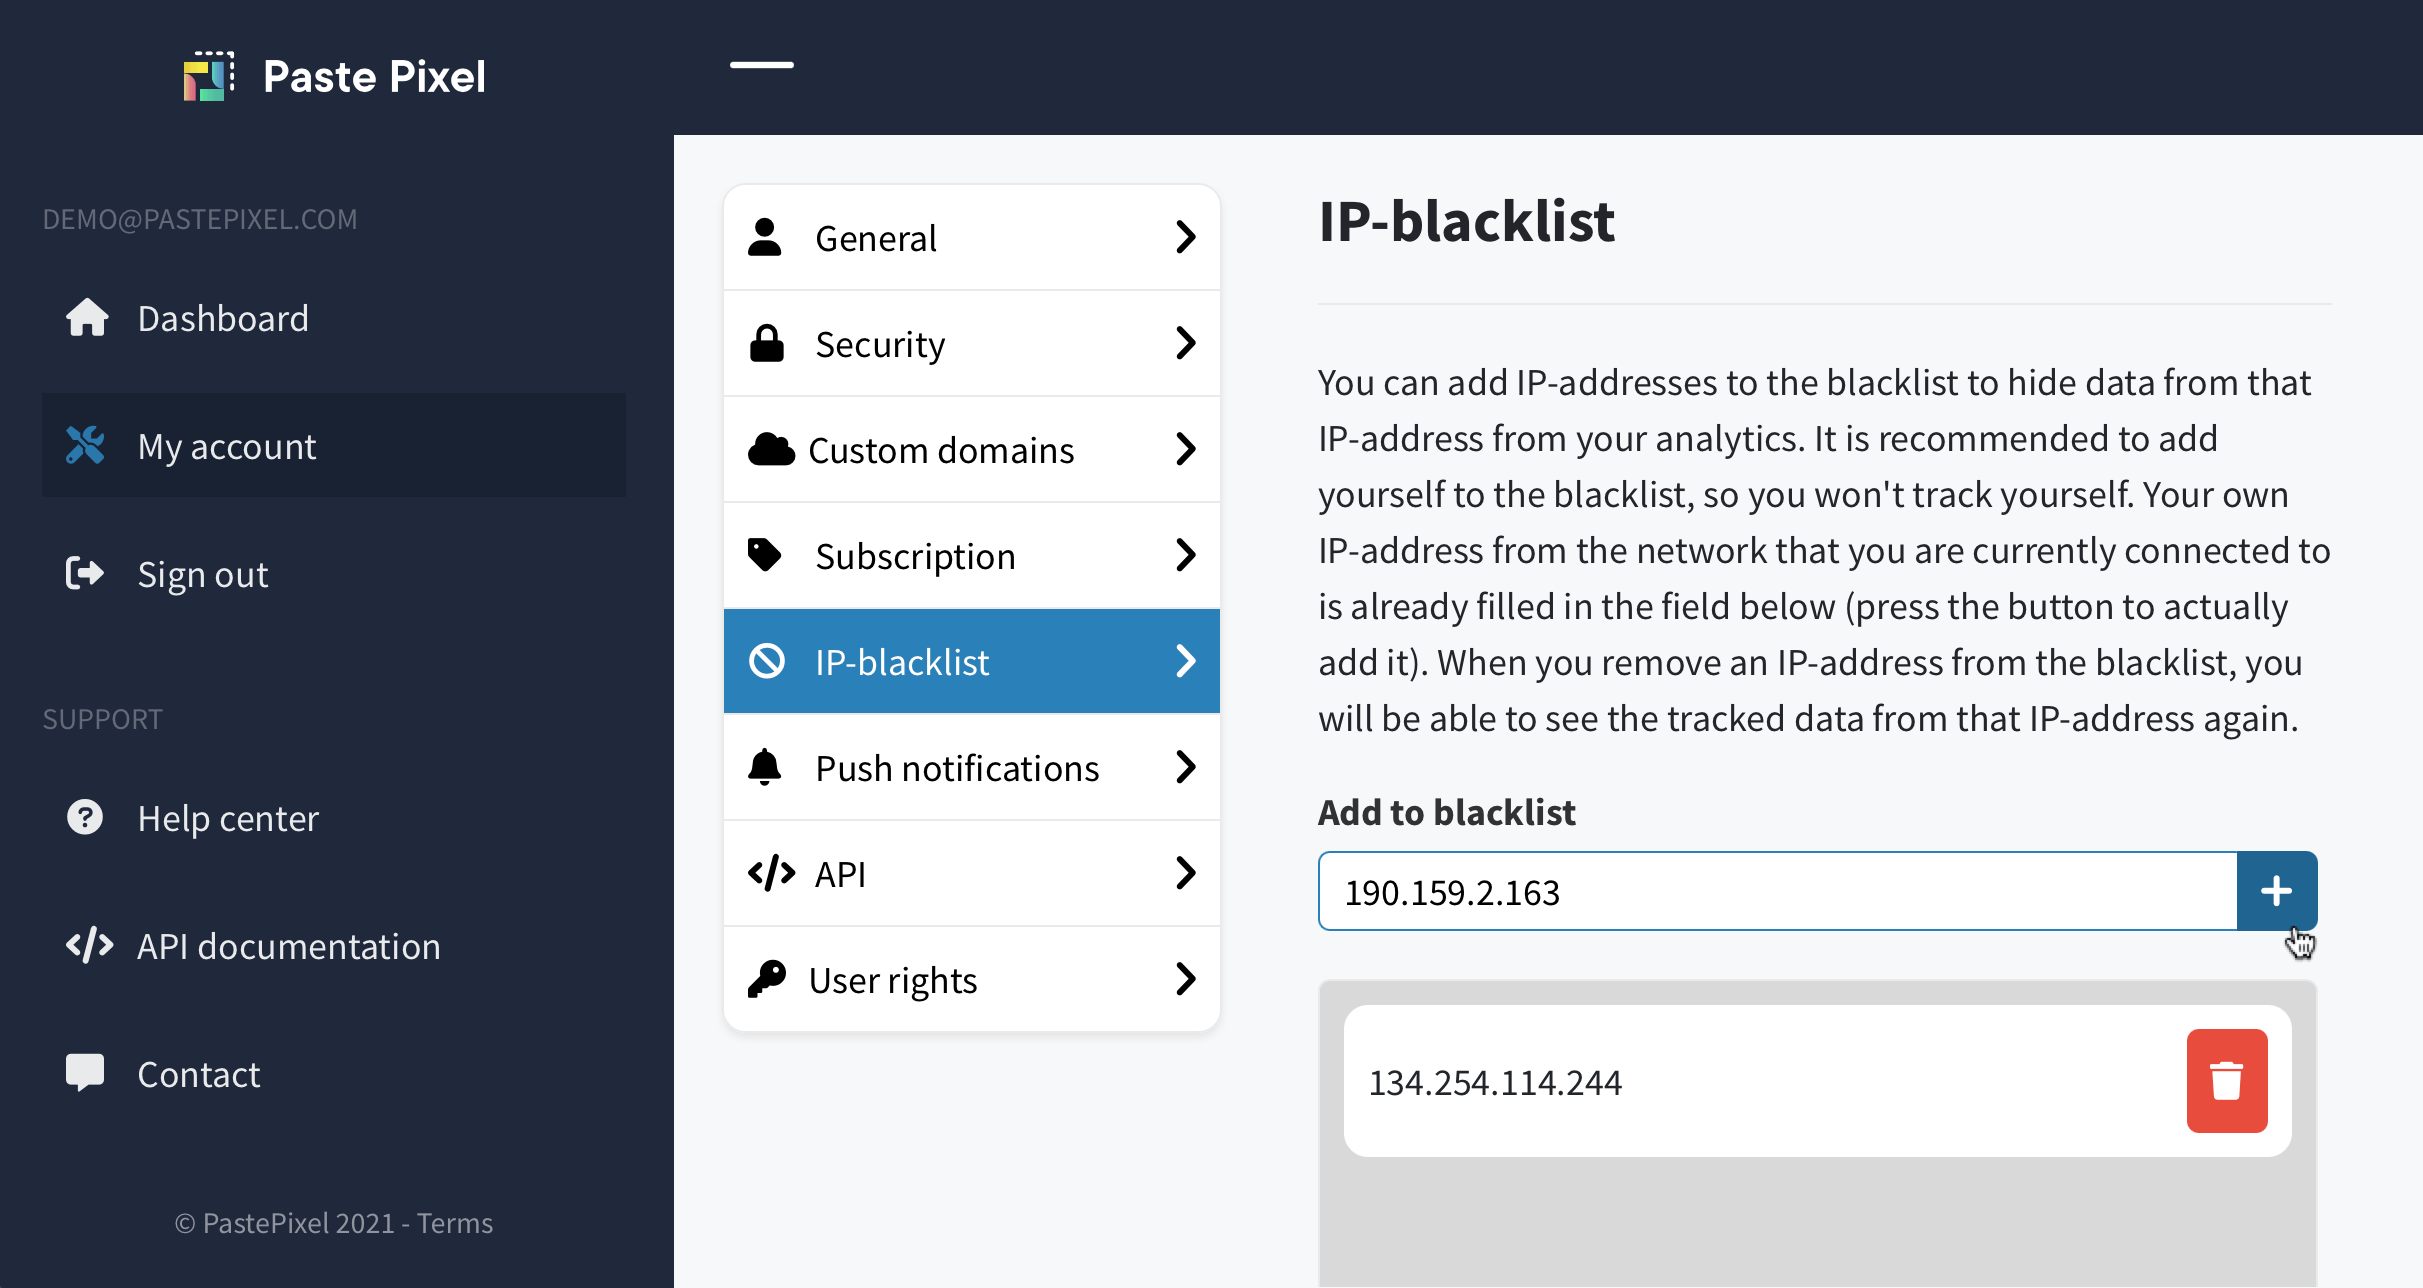 Add IP-address to the blacklist